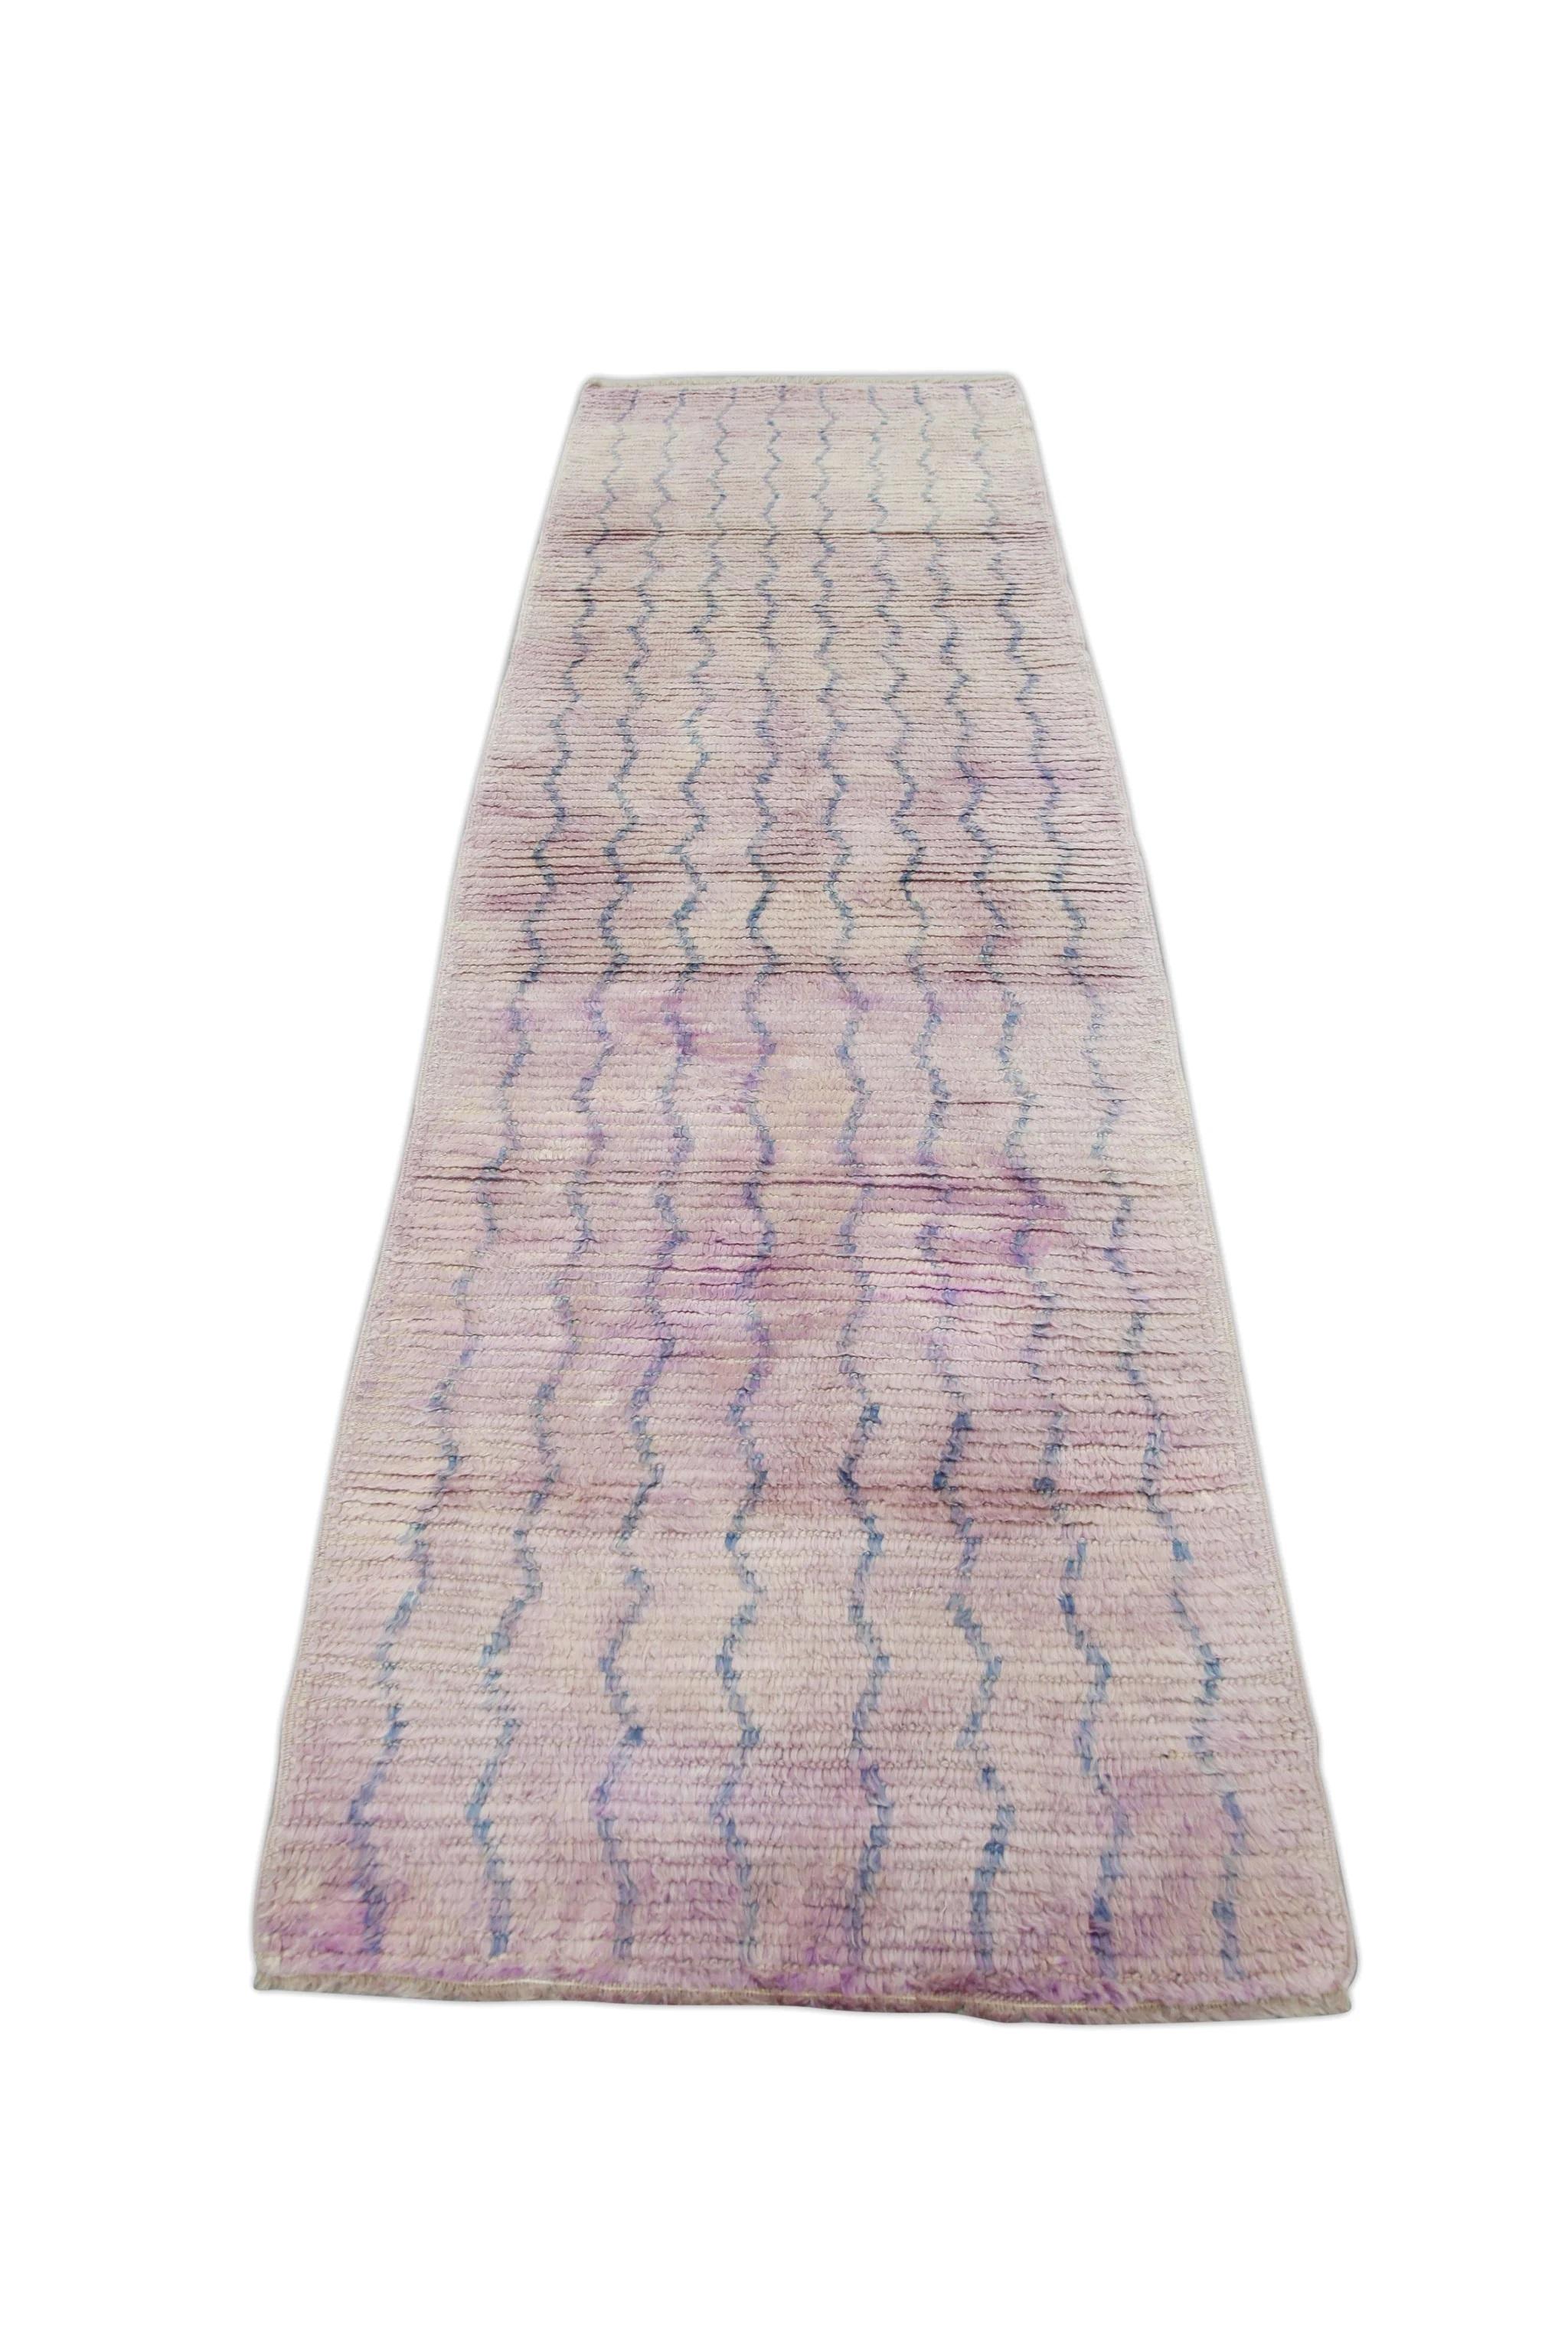 Modern Handmade Wool Tulu Runner in Pink and Blue Geometric Design 2'11